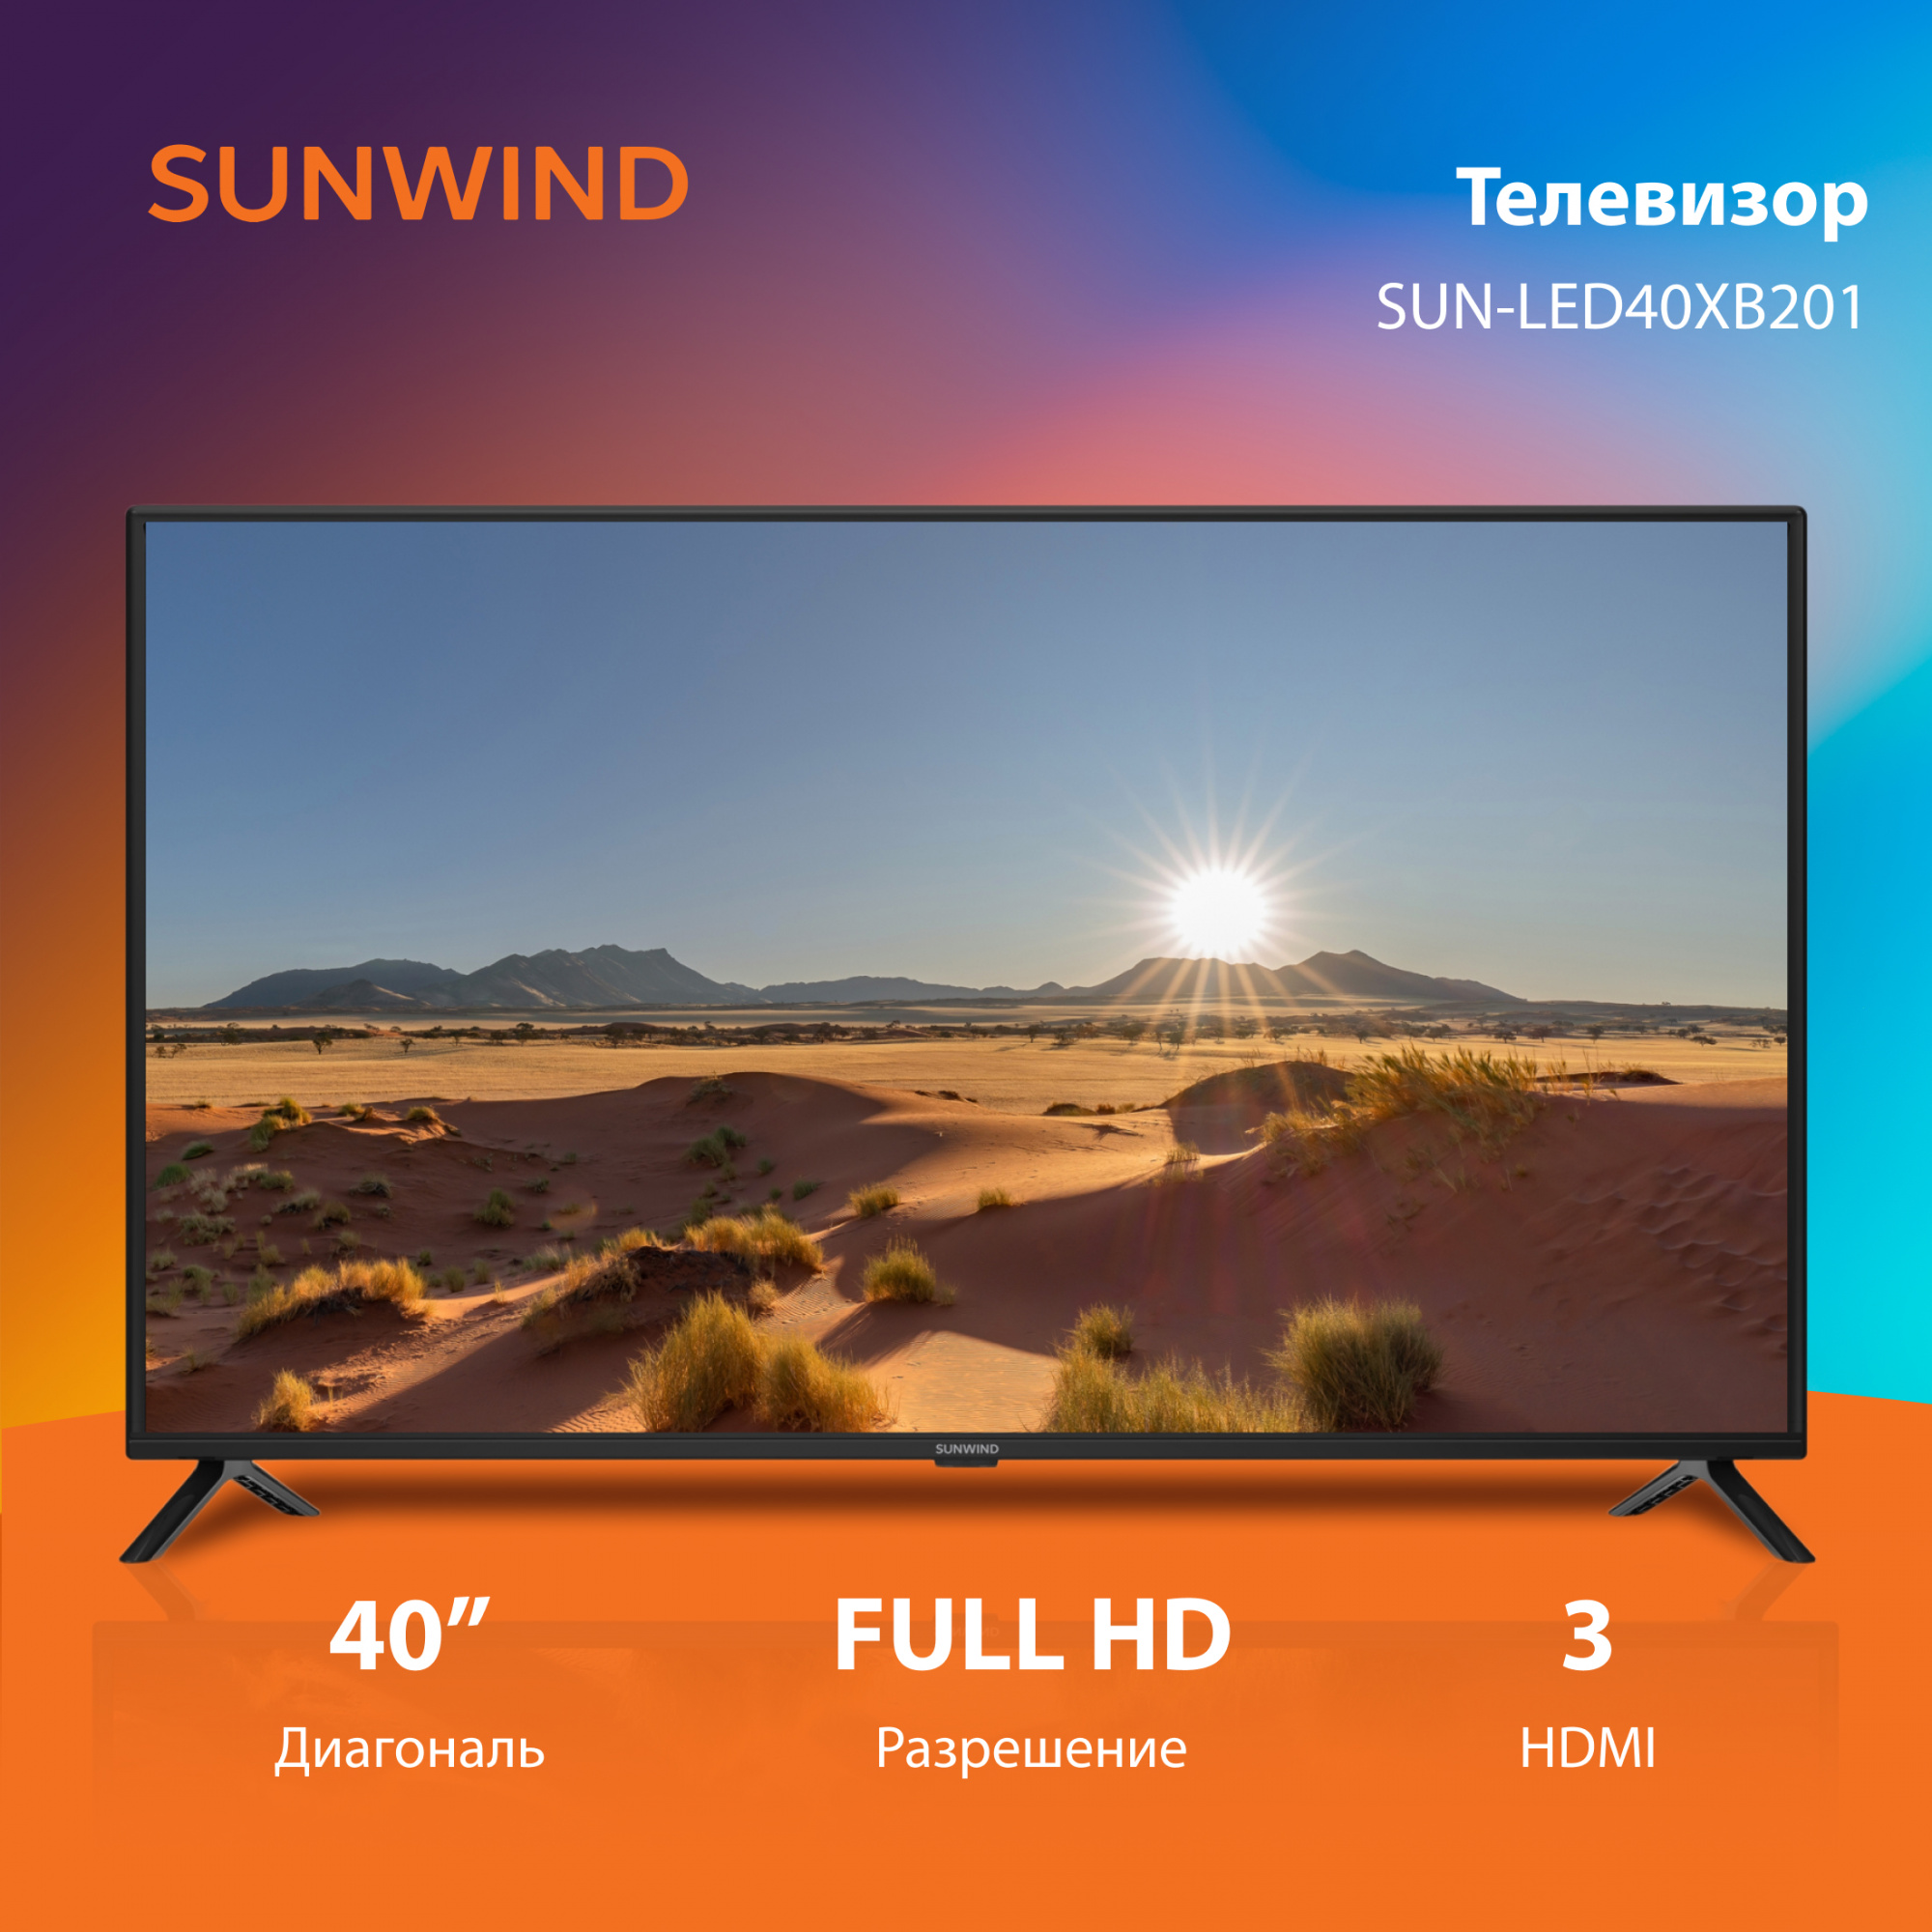 Телевизор sunwind отзывы. Телевизор Sunwind 50 дюймов. Телевизор Sunwind Sun-led50xu400.